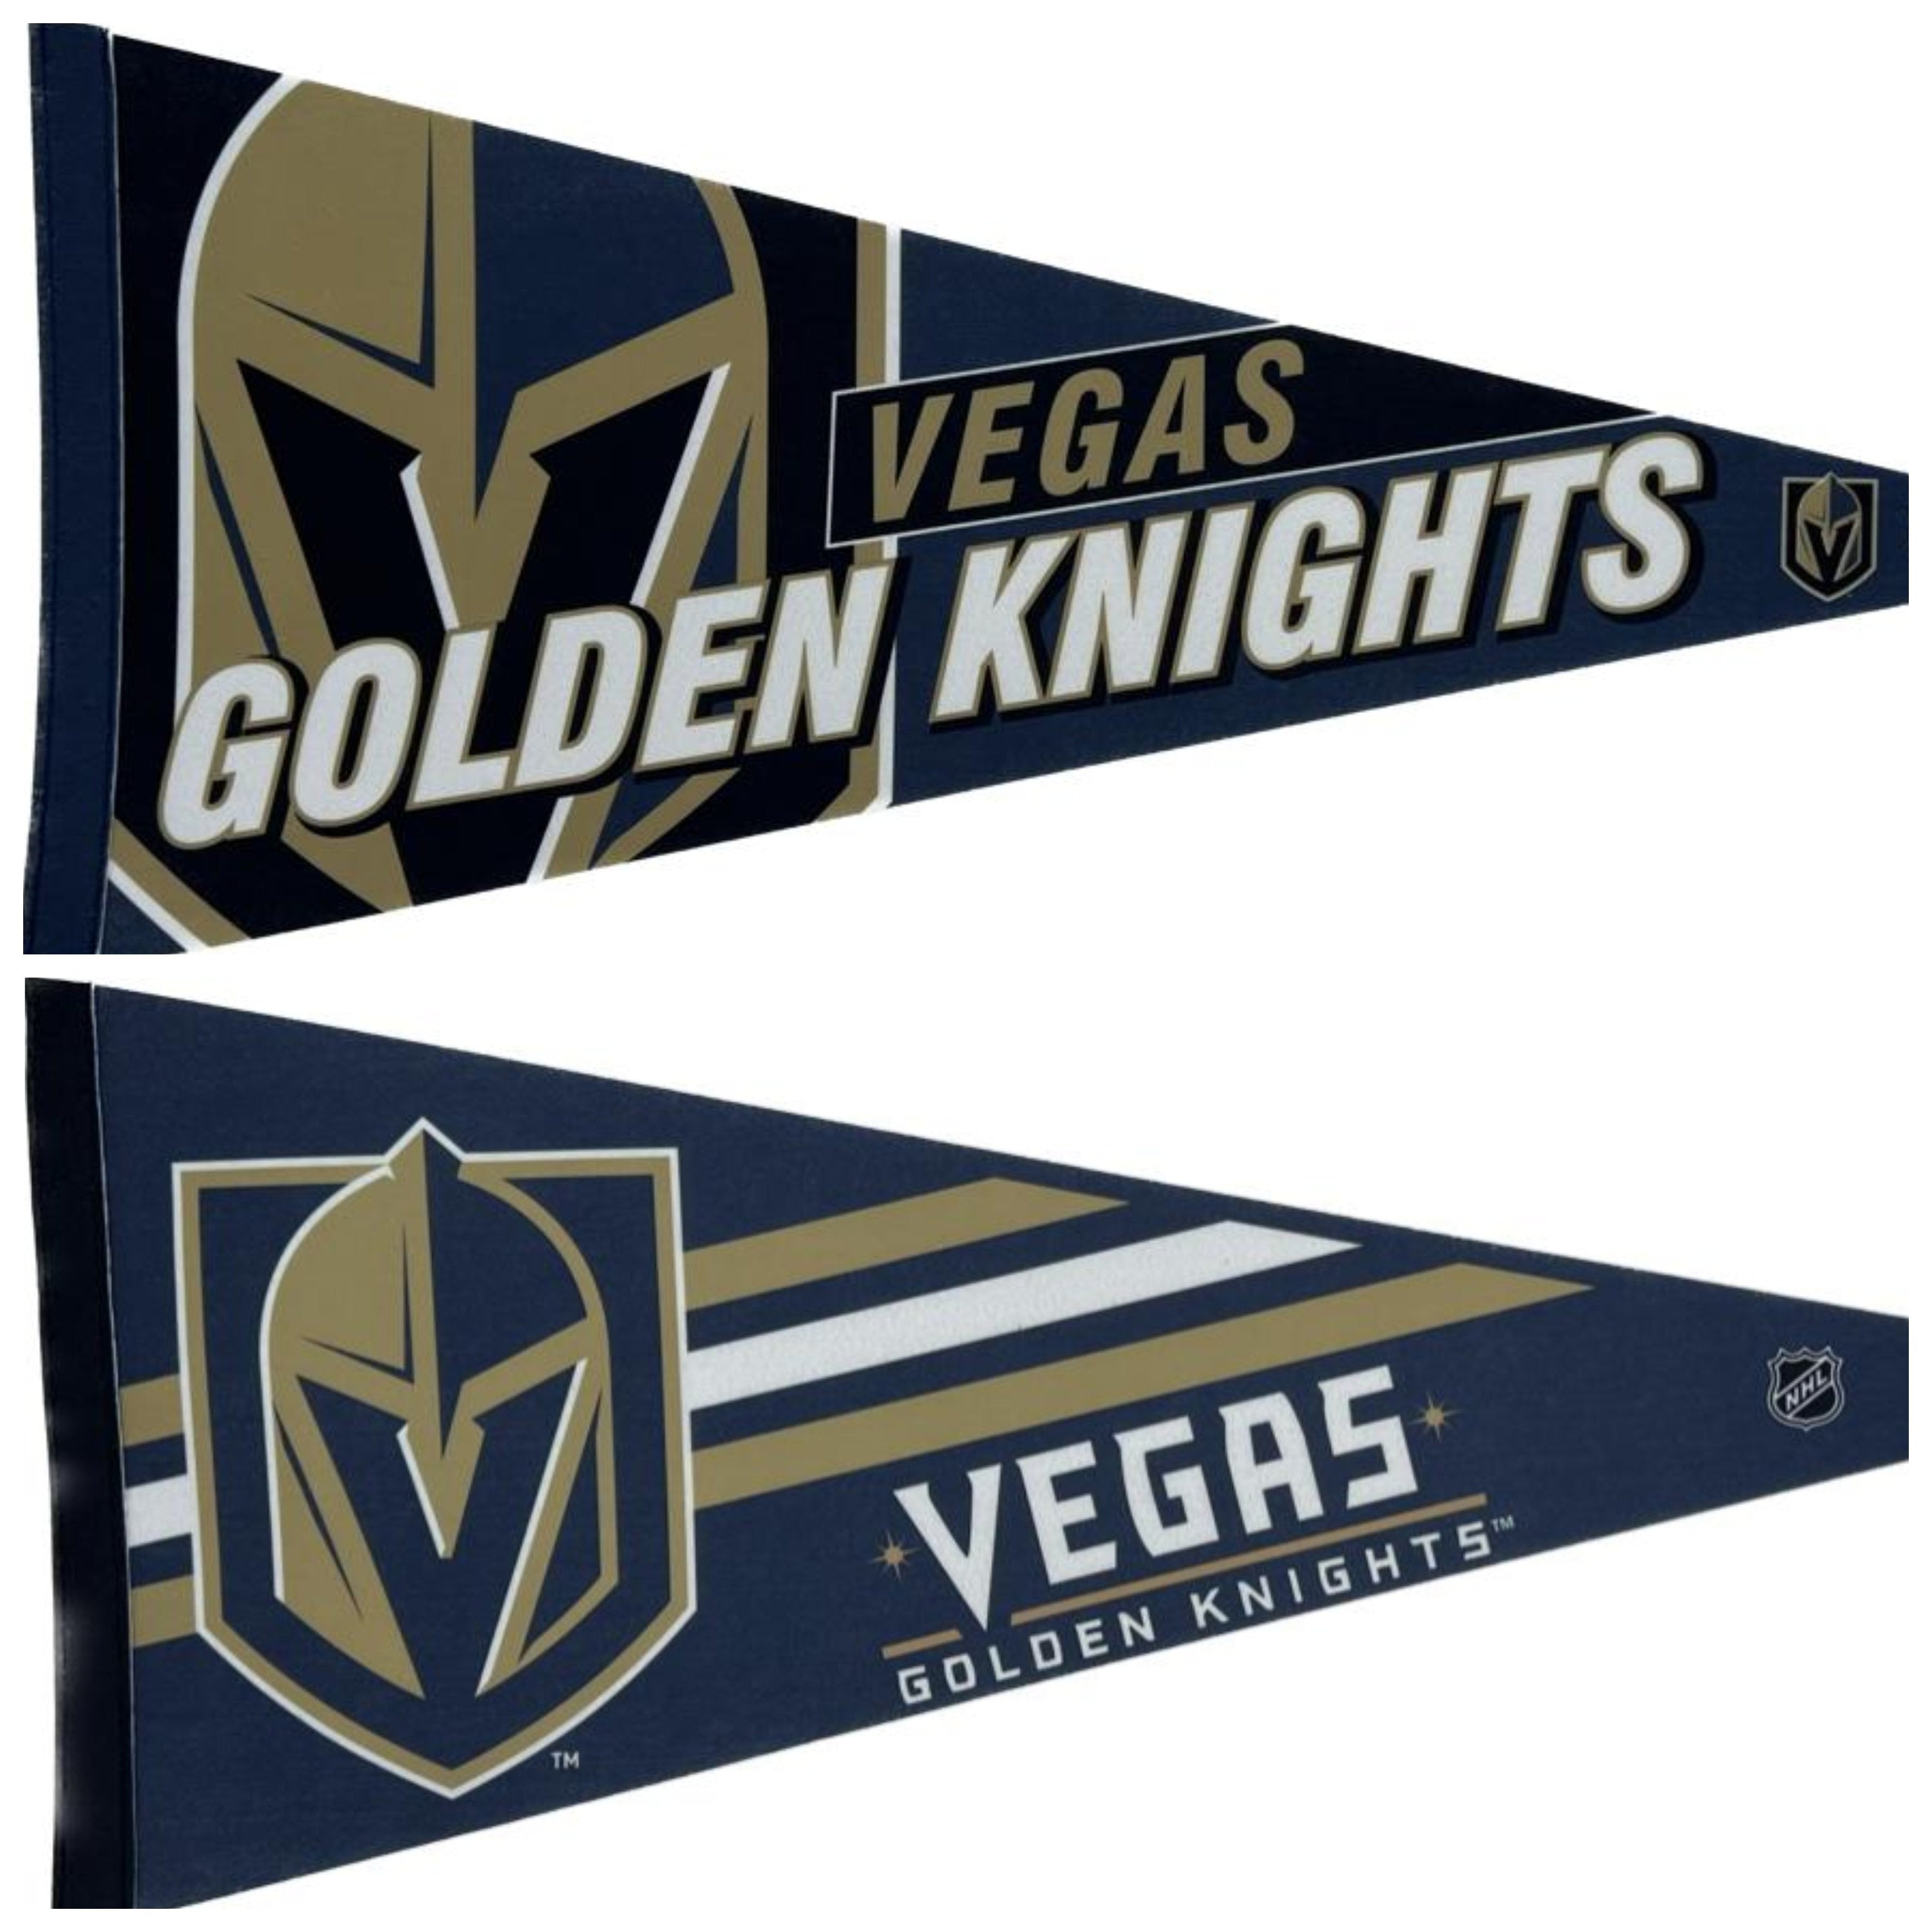 Las Vegas Golden Knights NHL pennants vaantje vlaggetje vlag fanion pennant flag drapeau ice hockey ijshockey usa ice skating usa america - Big Logo